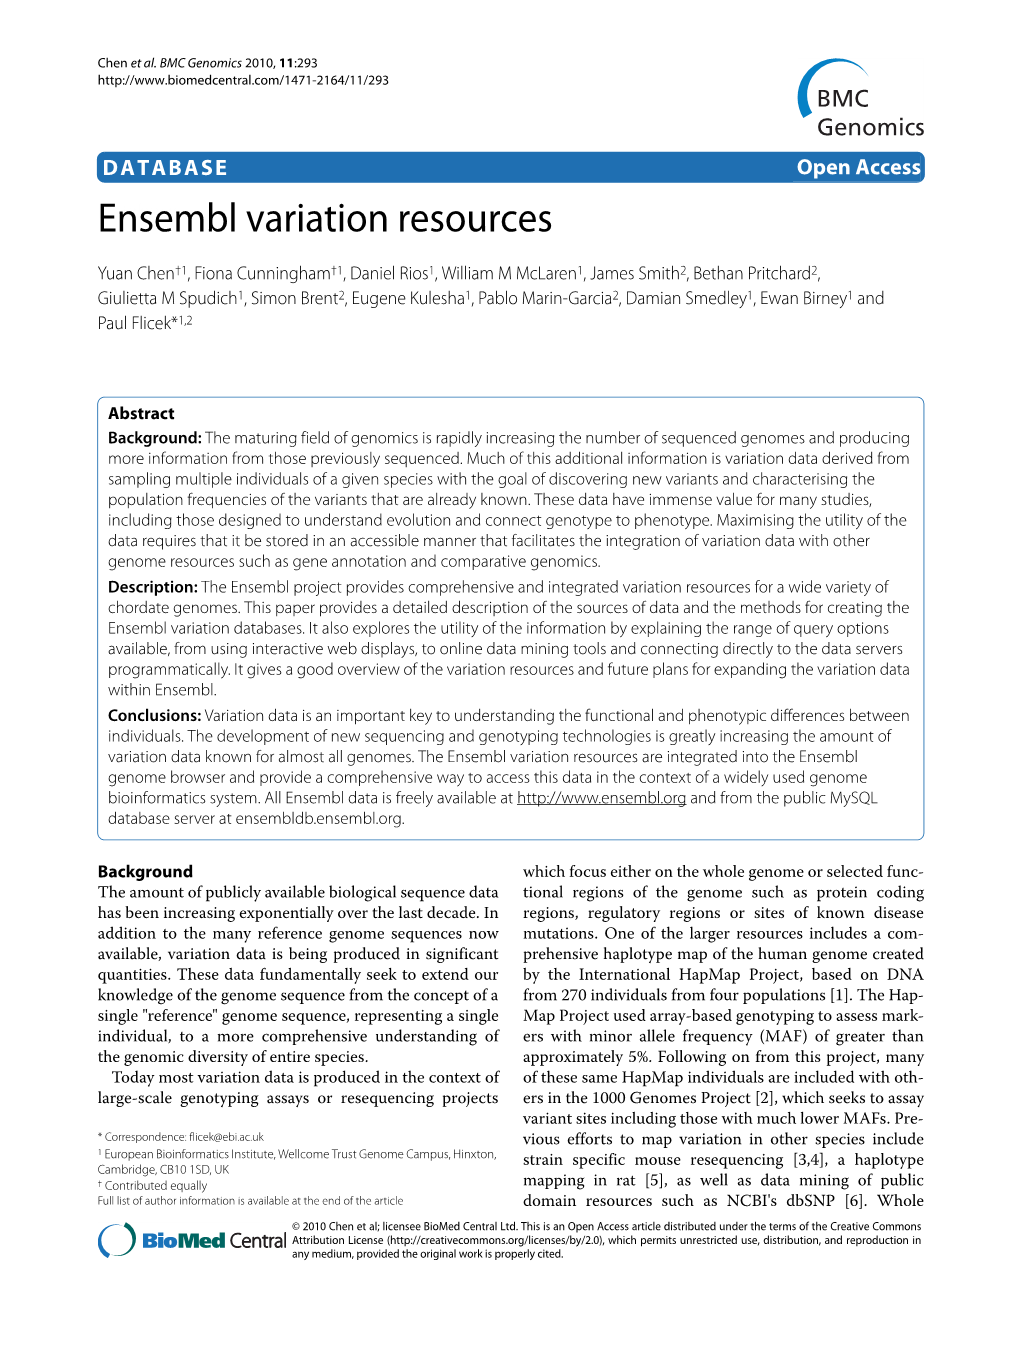 Ensembl Variation Resources